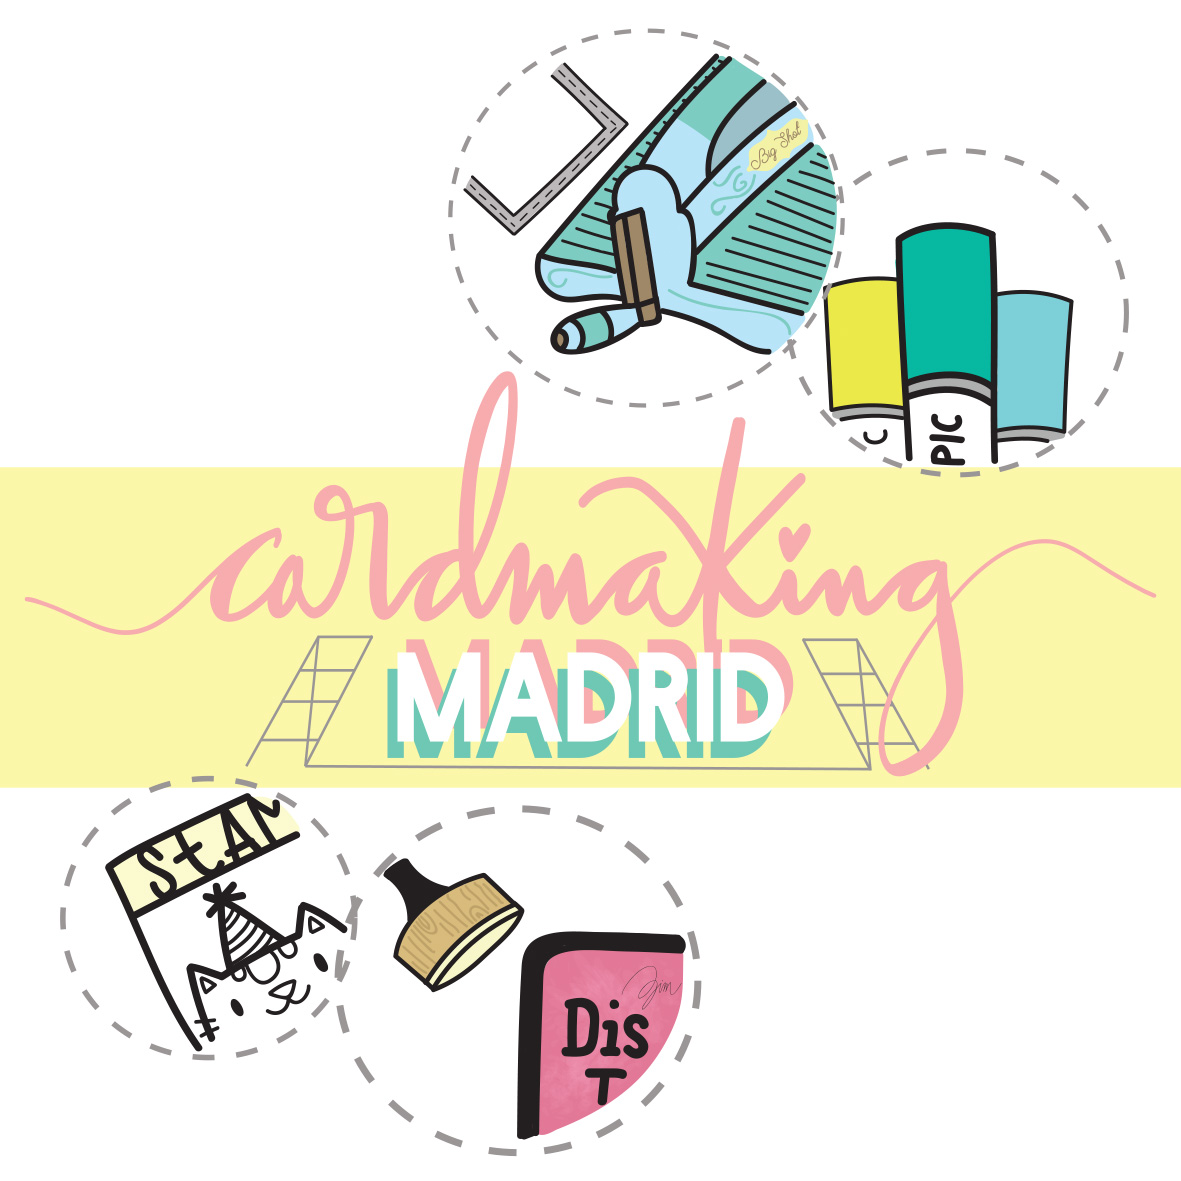 Cardmaking Madrid